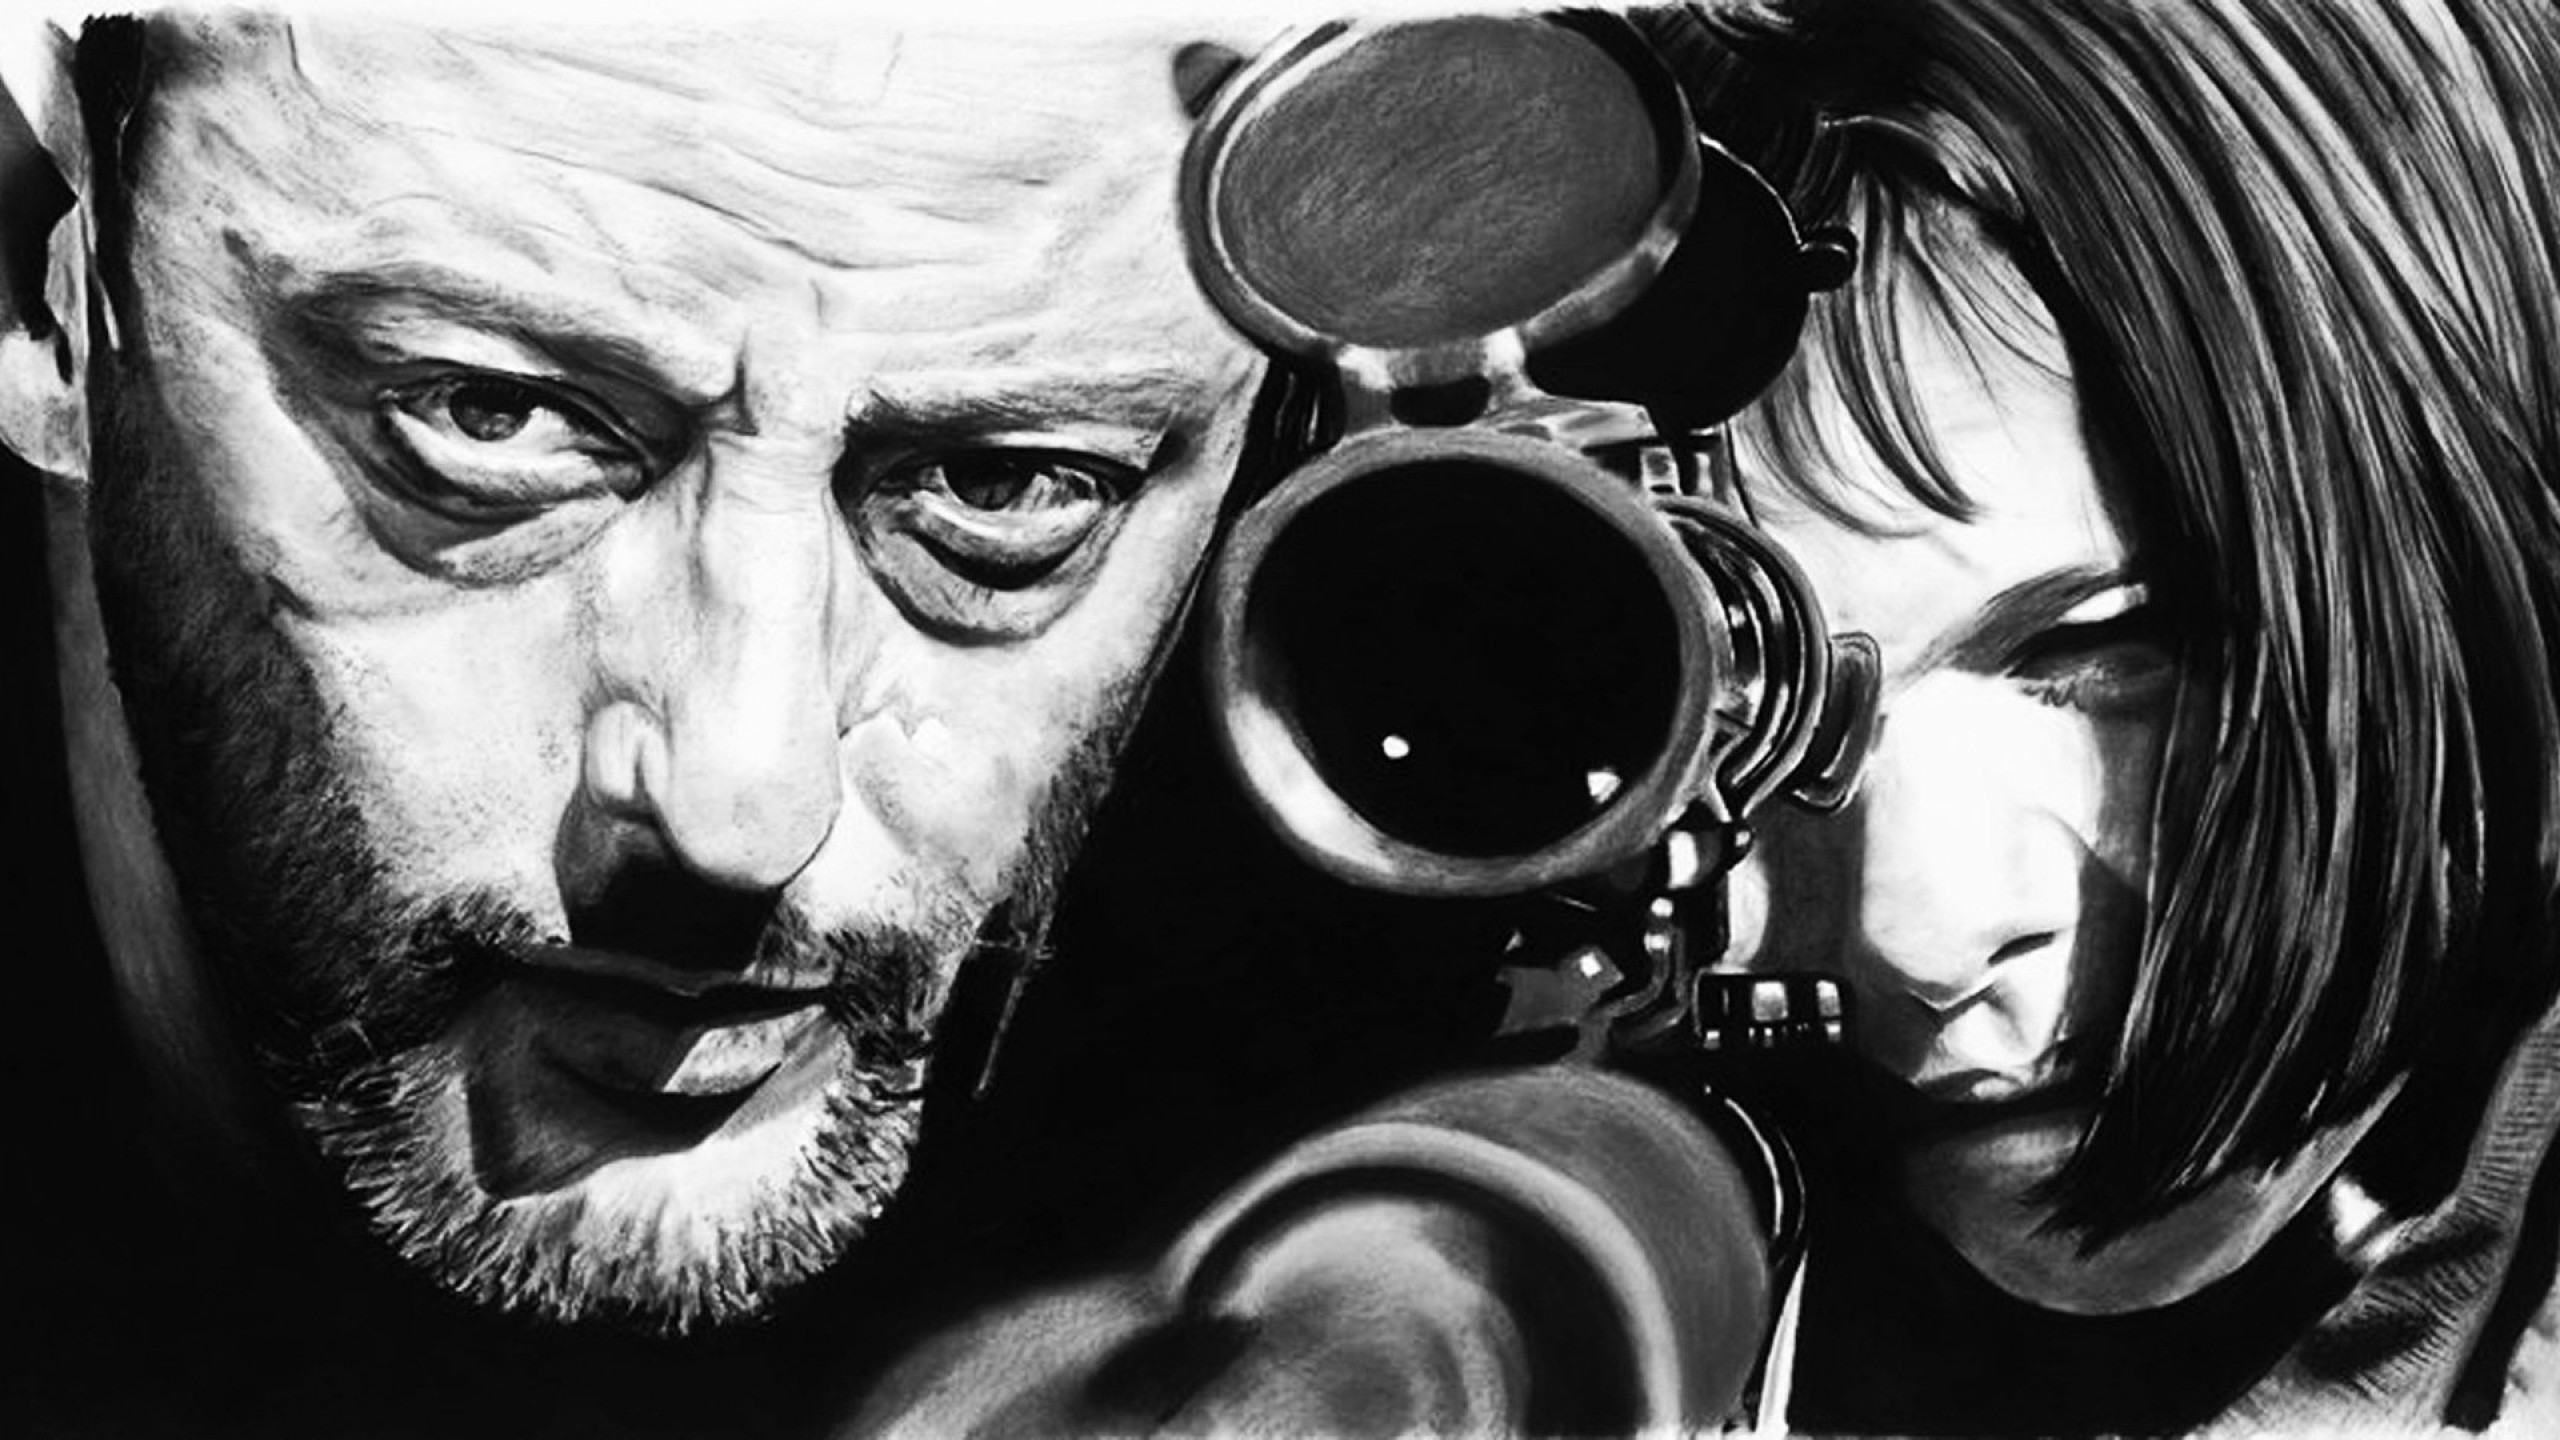 Leon The Professional Jean Reno Natalie Portman Snipers Artwork Monochrome 2560x1440